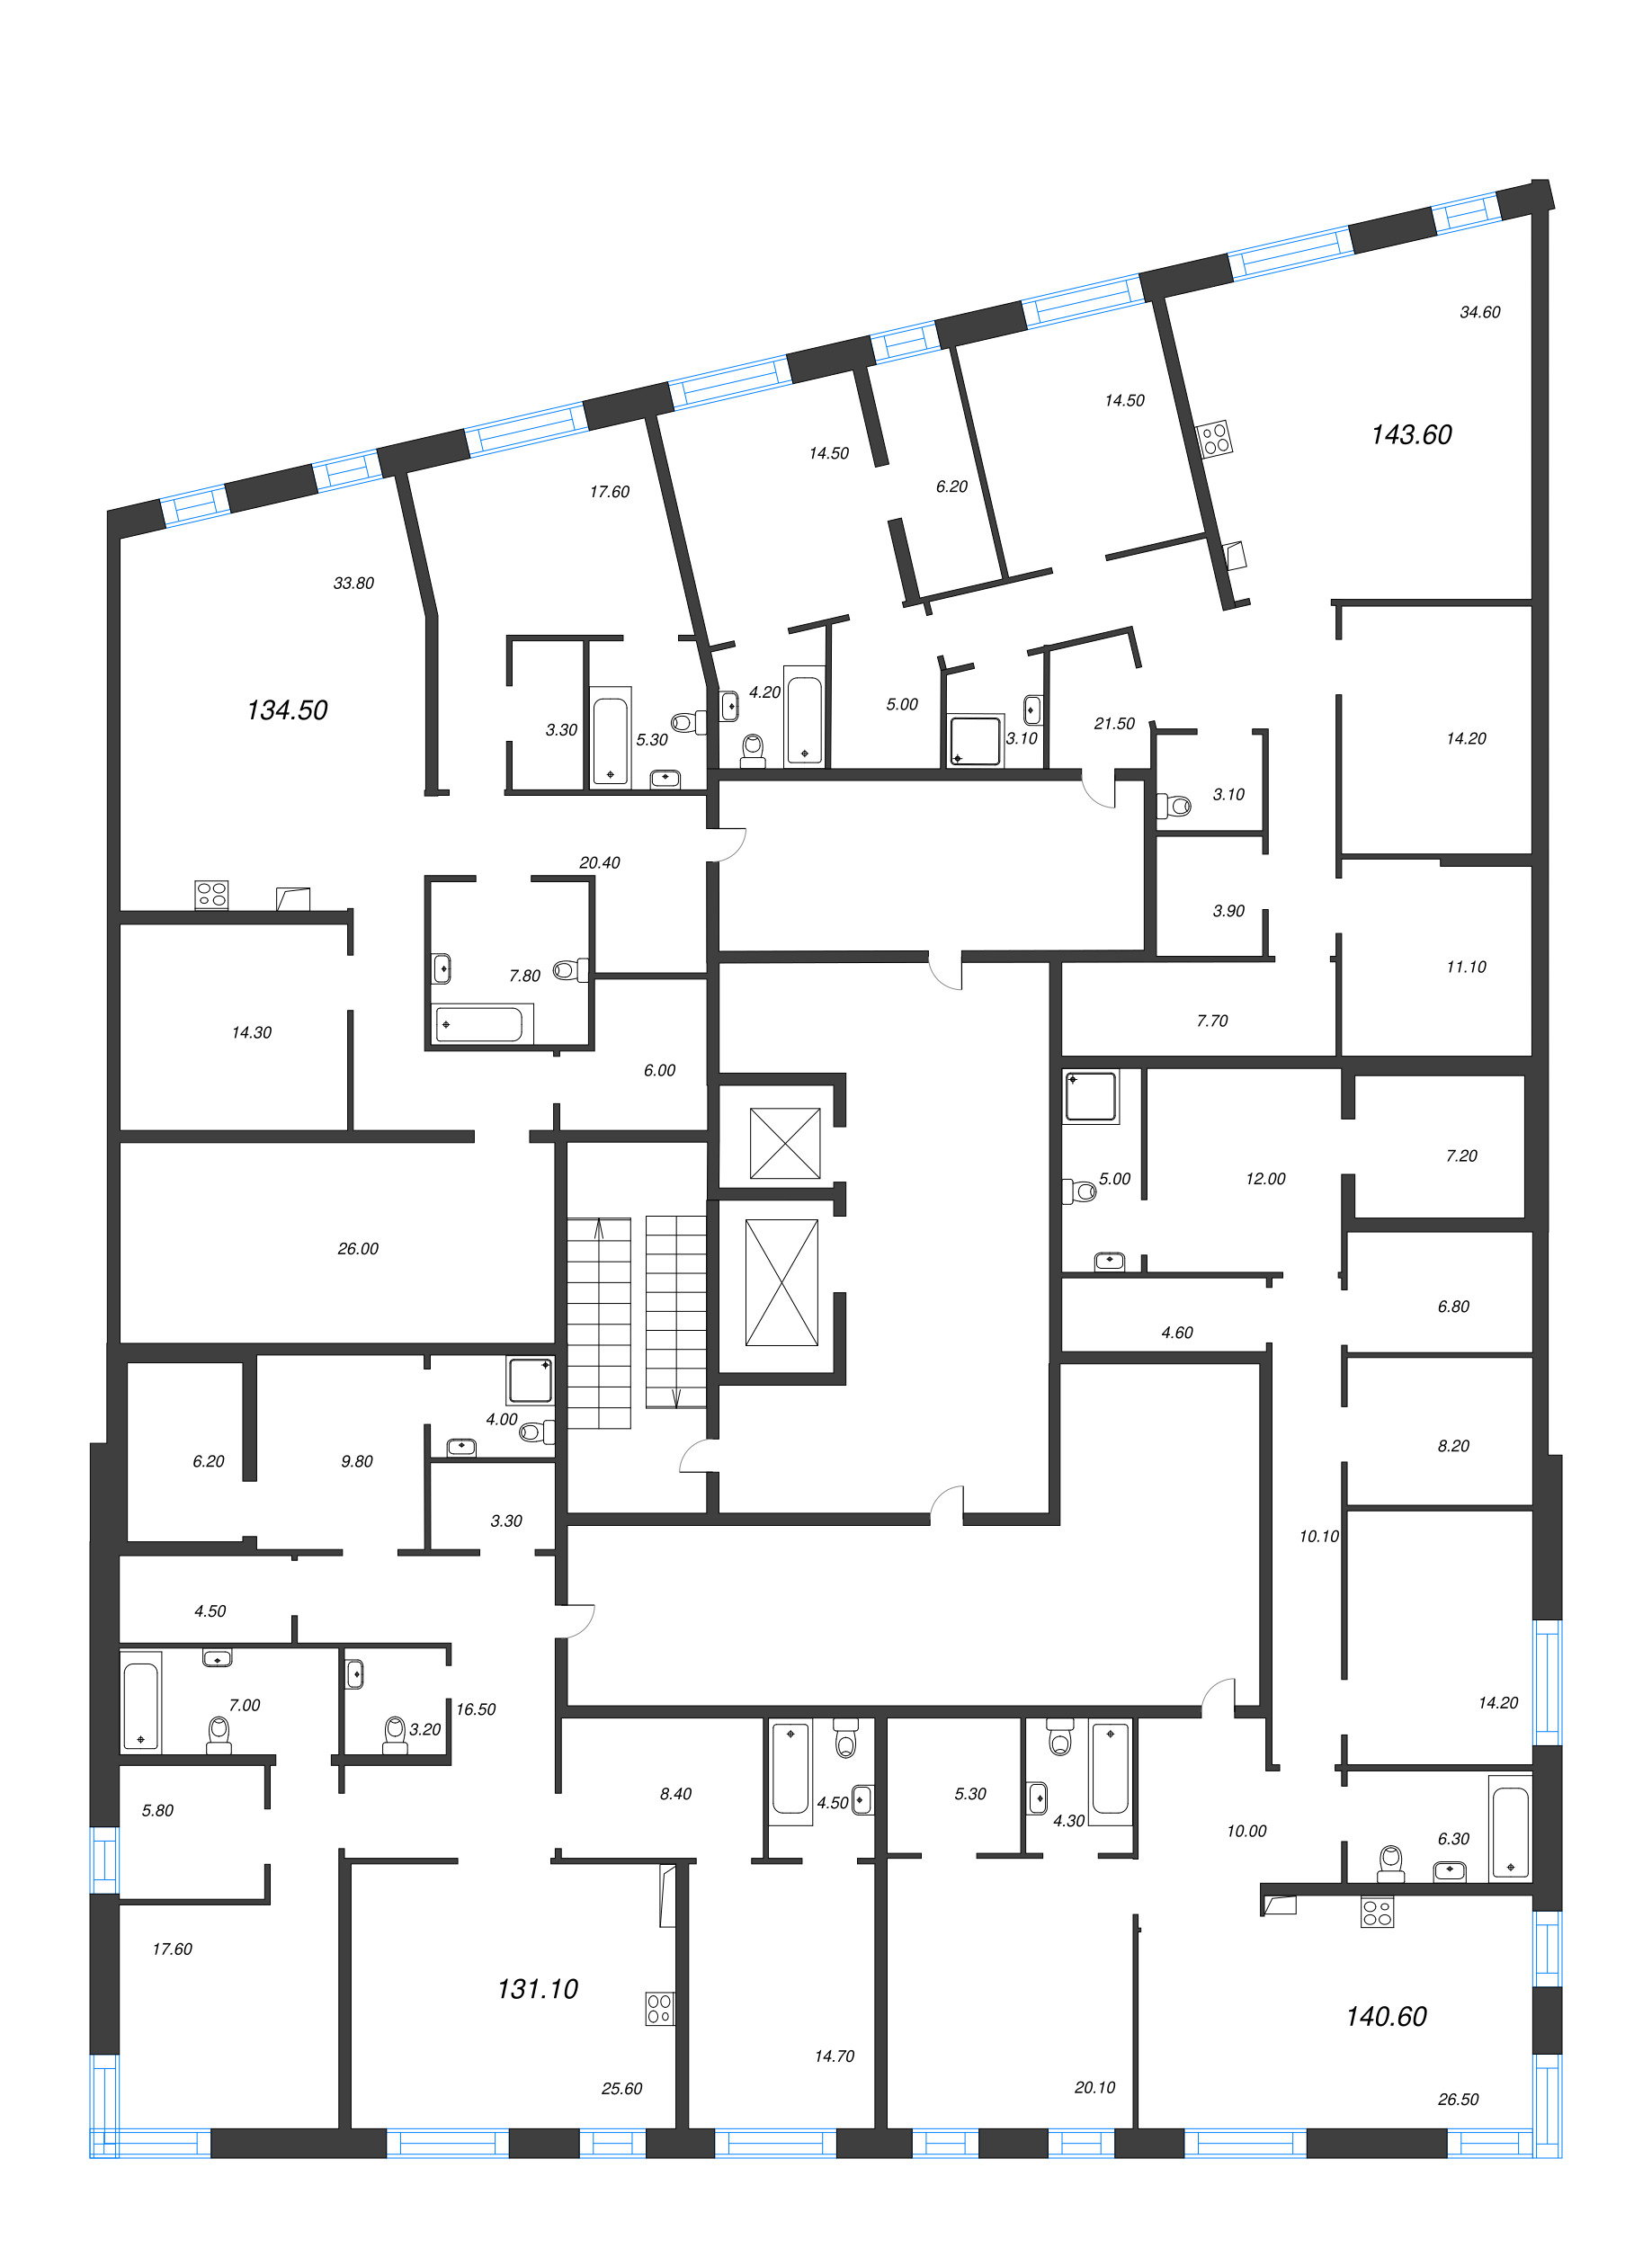 4-комнатная (Евро) квартира, 140.6 м² - планировка этажа